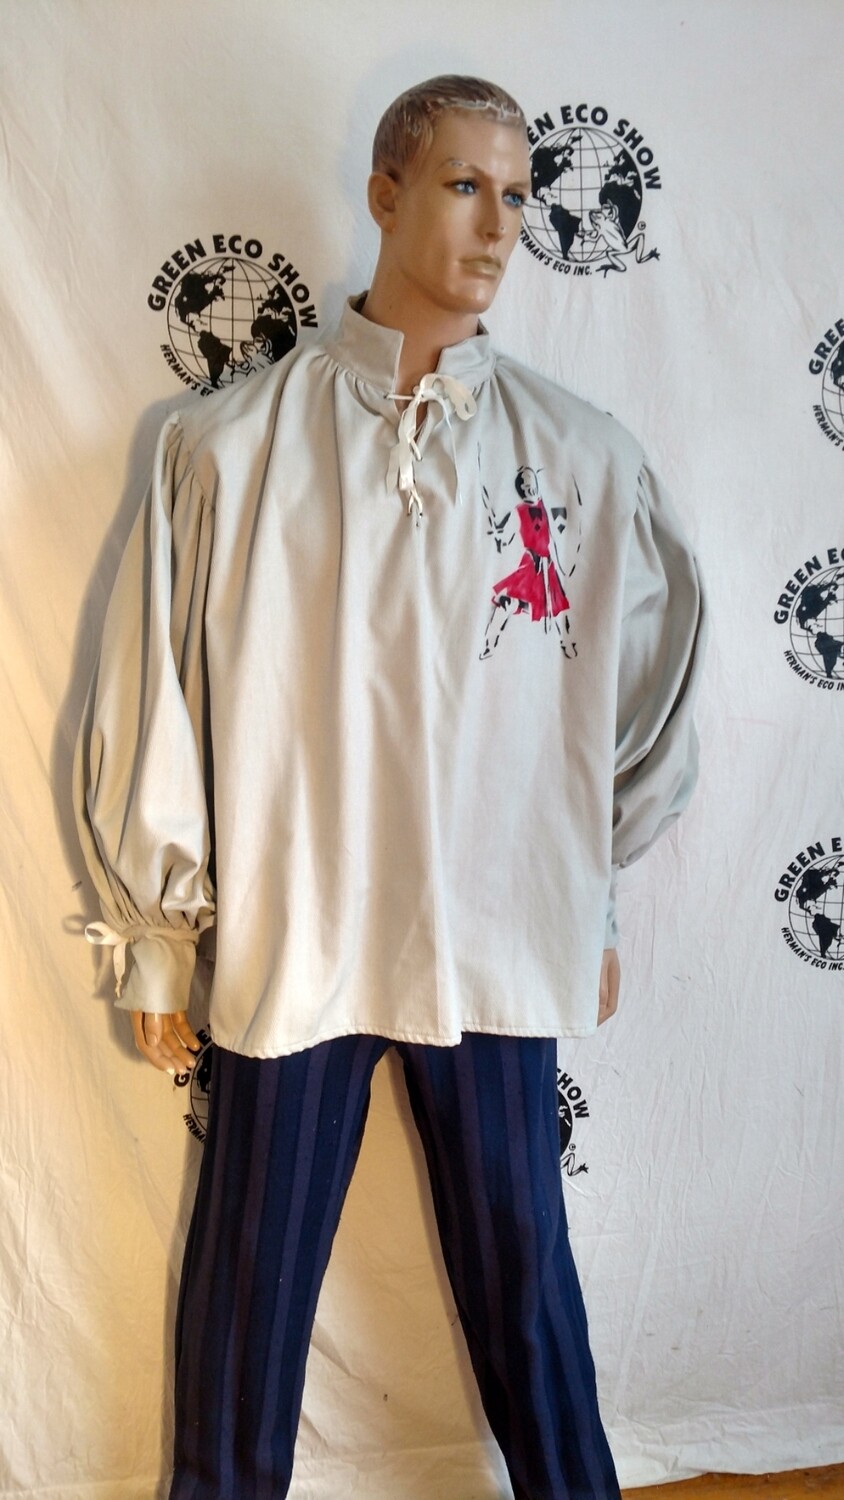 Swashbuckler shirt XL airbrushed knight